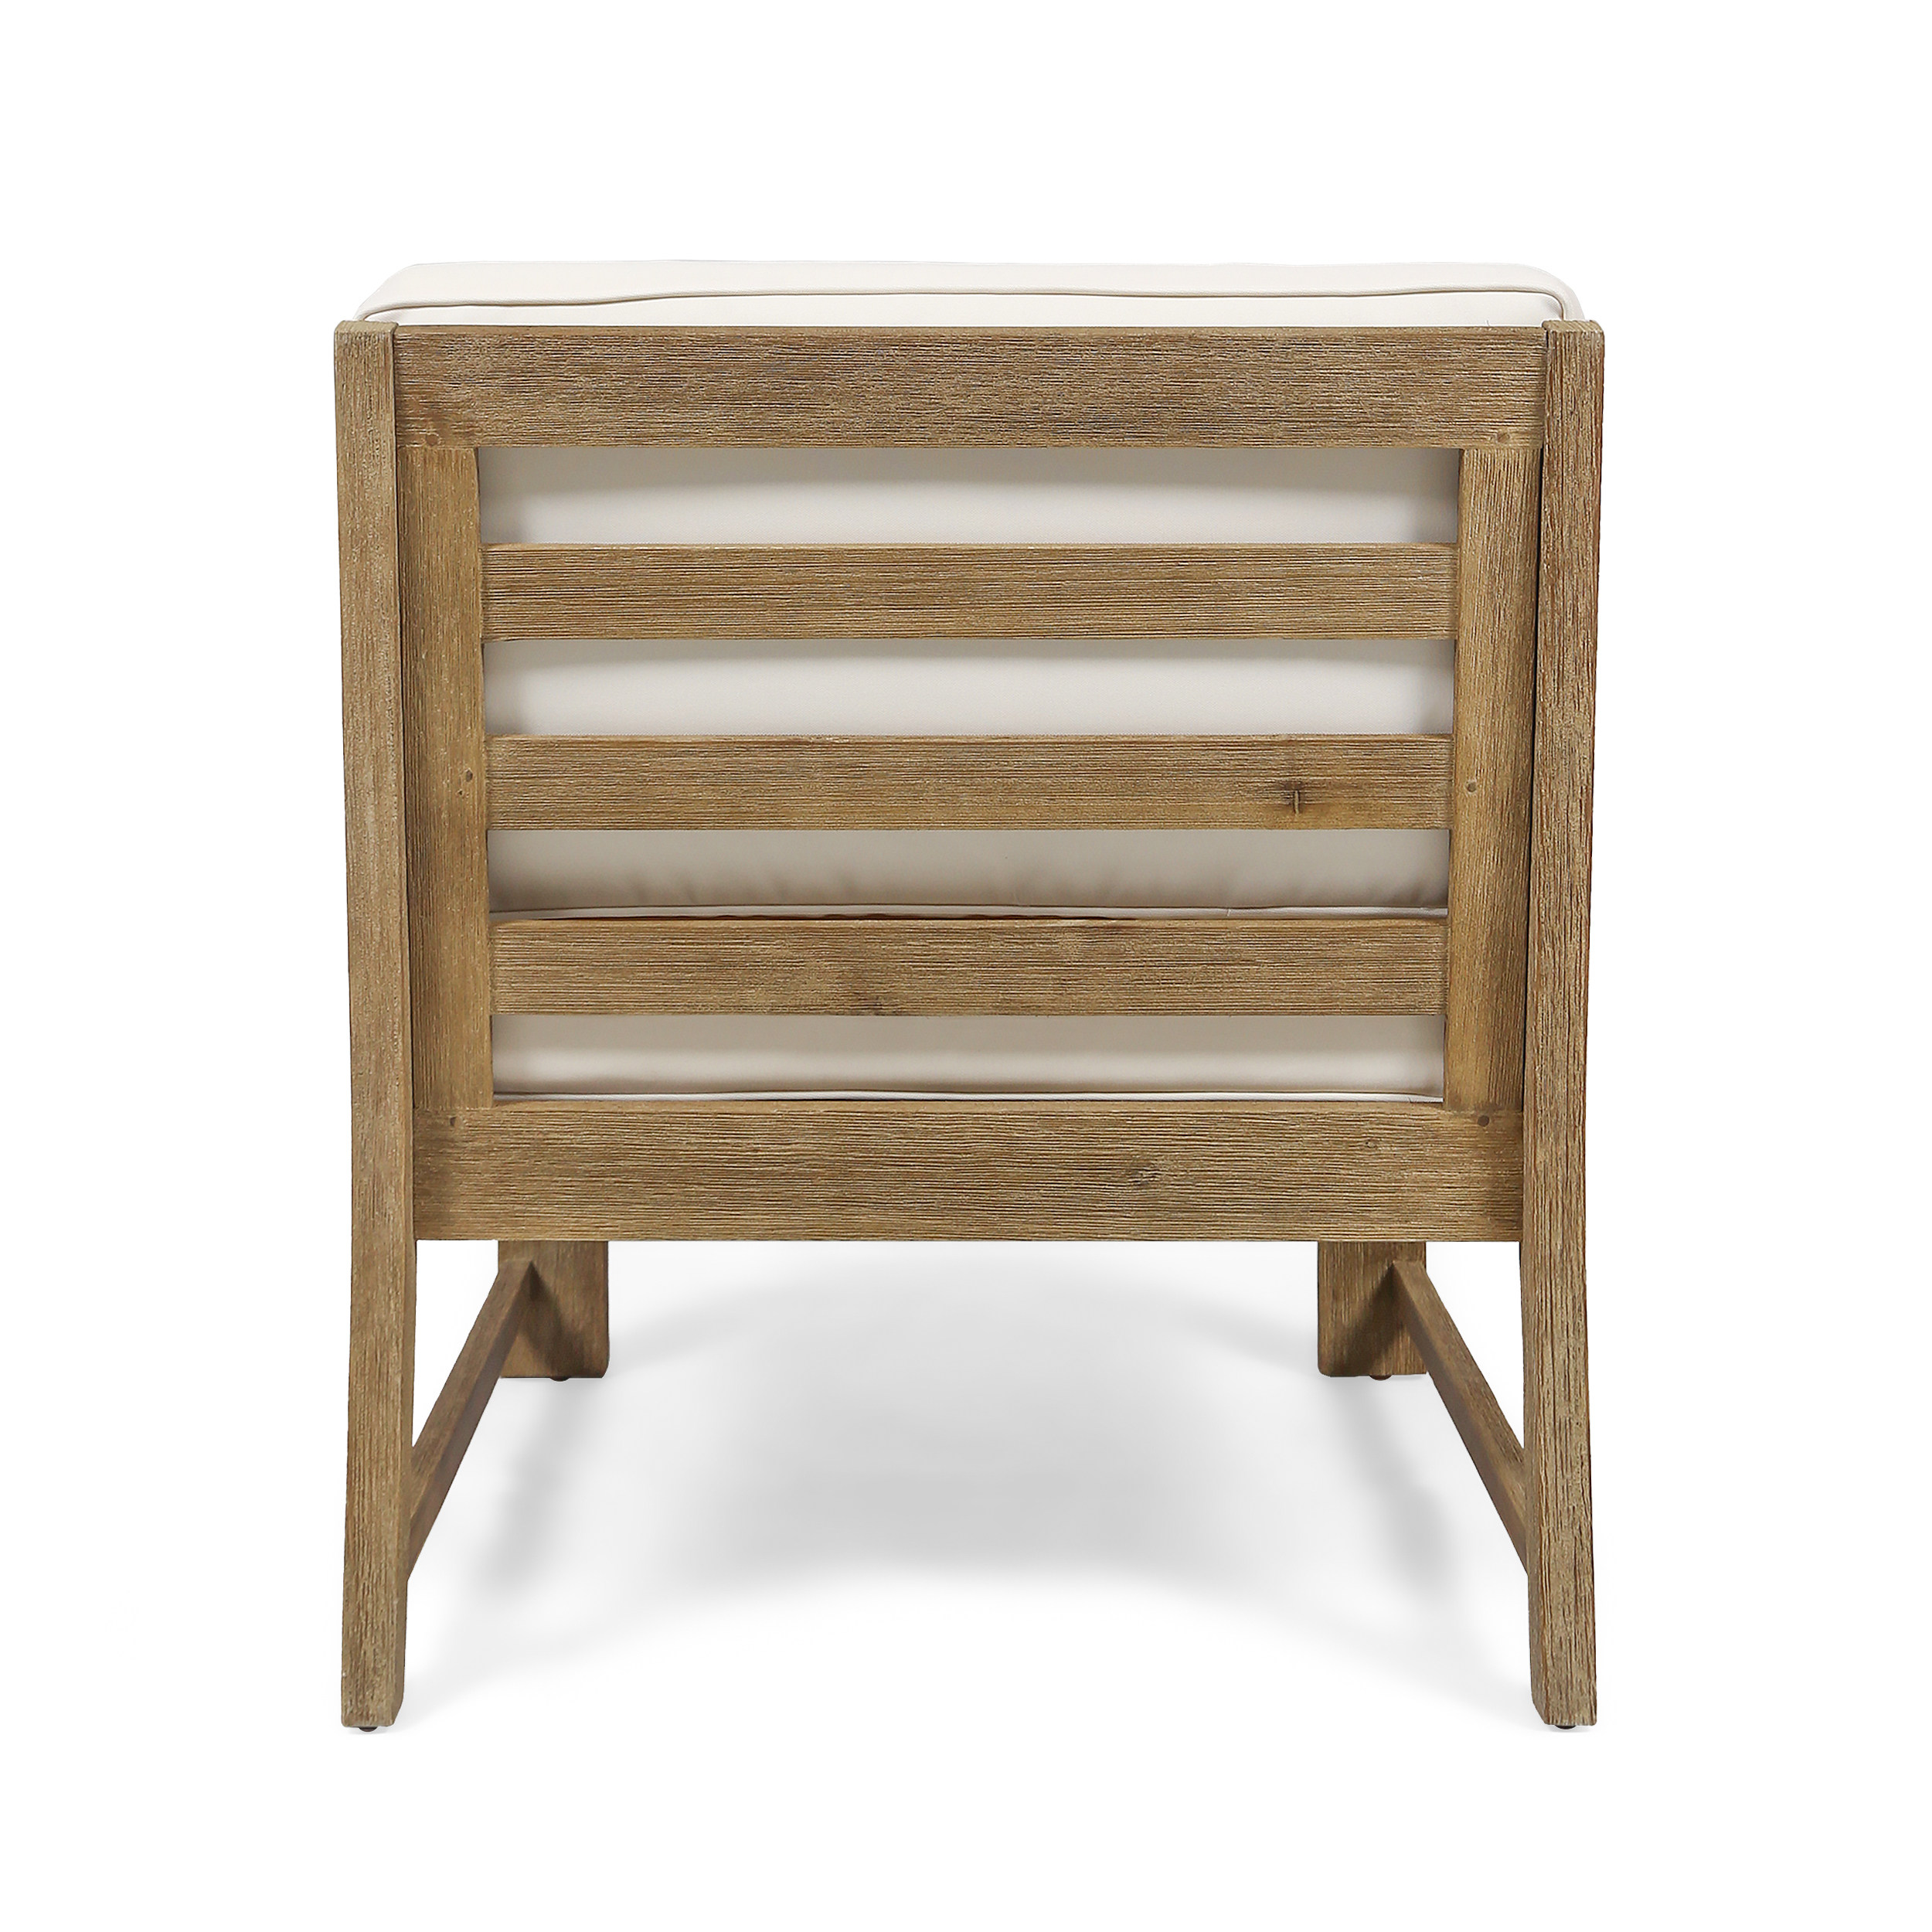 GDF Studio Makayla Outdoor 3 Seater Acacia Wood Sofa Sectional, Light Brown and Cream - image 4 of 10